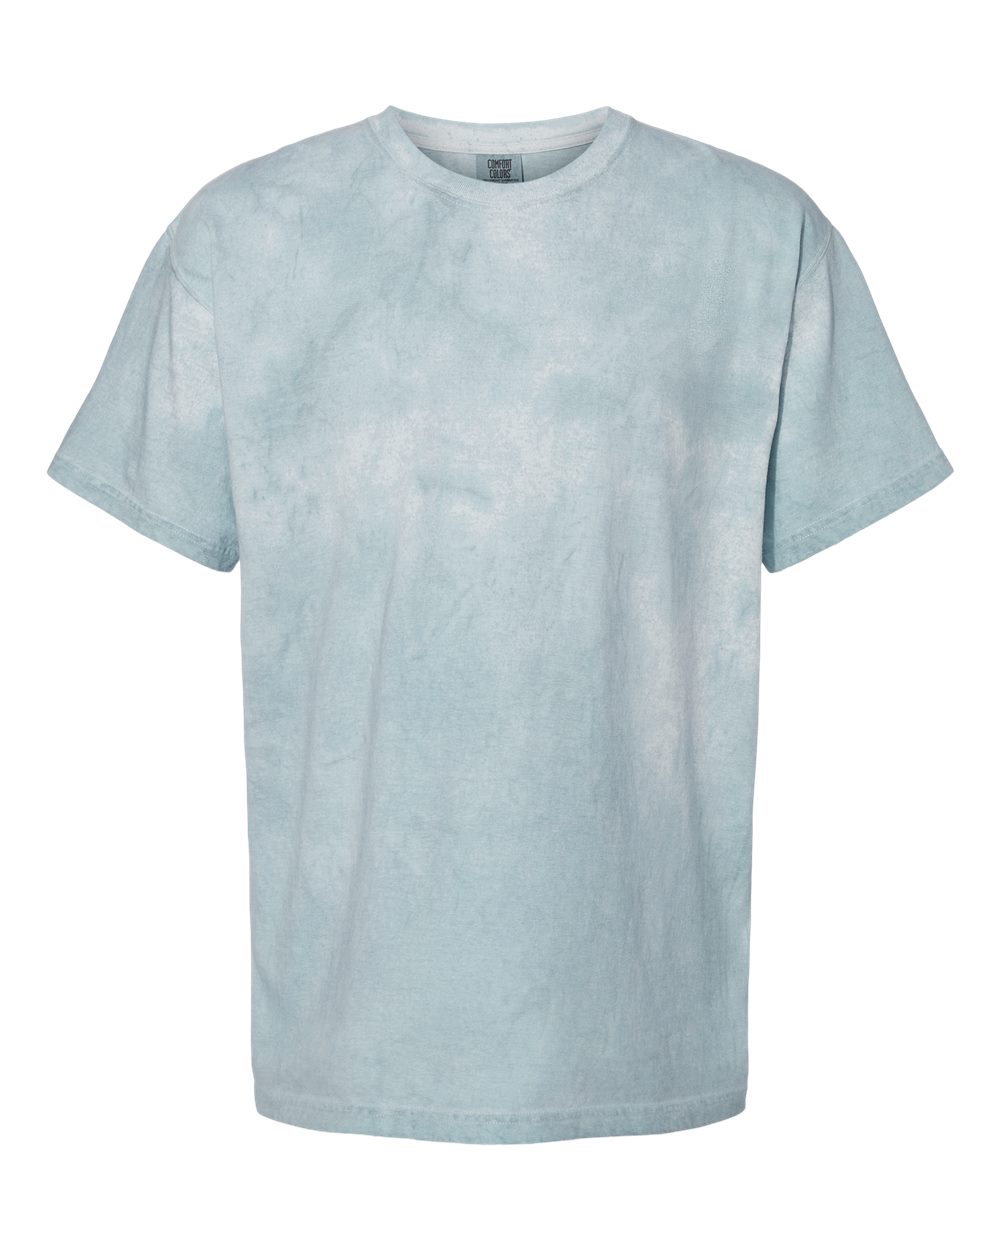 "Build A Tee" Colorblast - Comfort Colors Short Sleeve T-Shirt